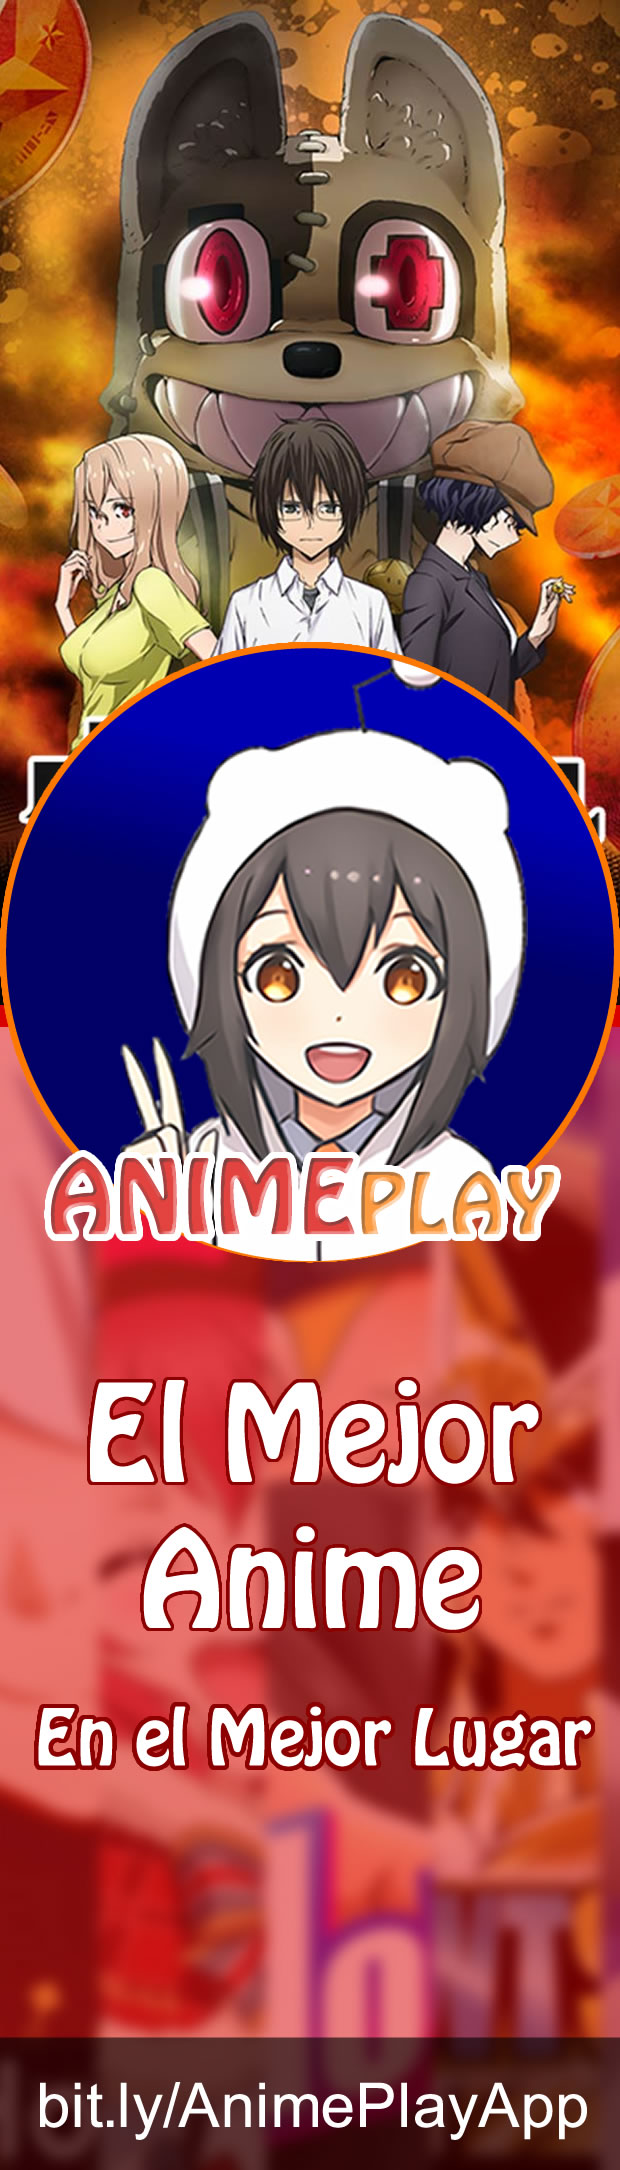 Anime Play App (jpg) (vertical)